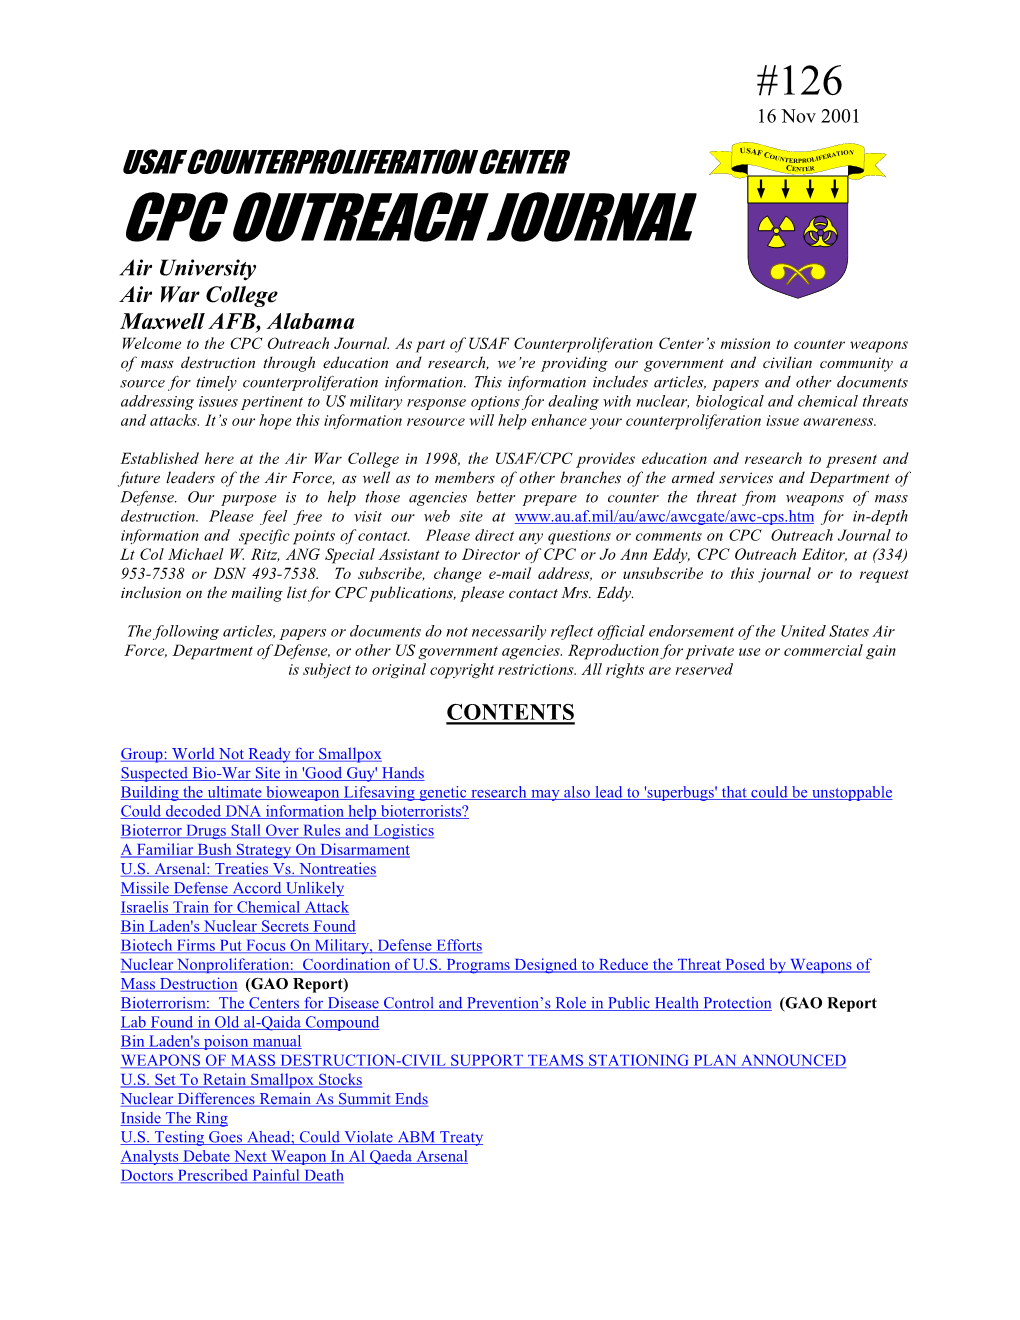 USAF Counterproliferation Center CPC Outreach Journal #126